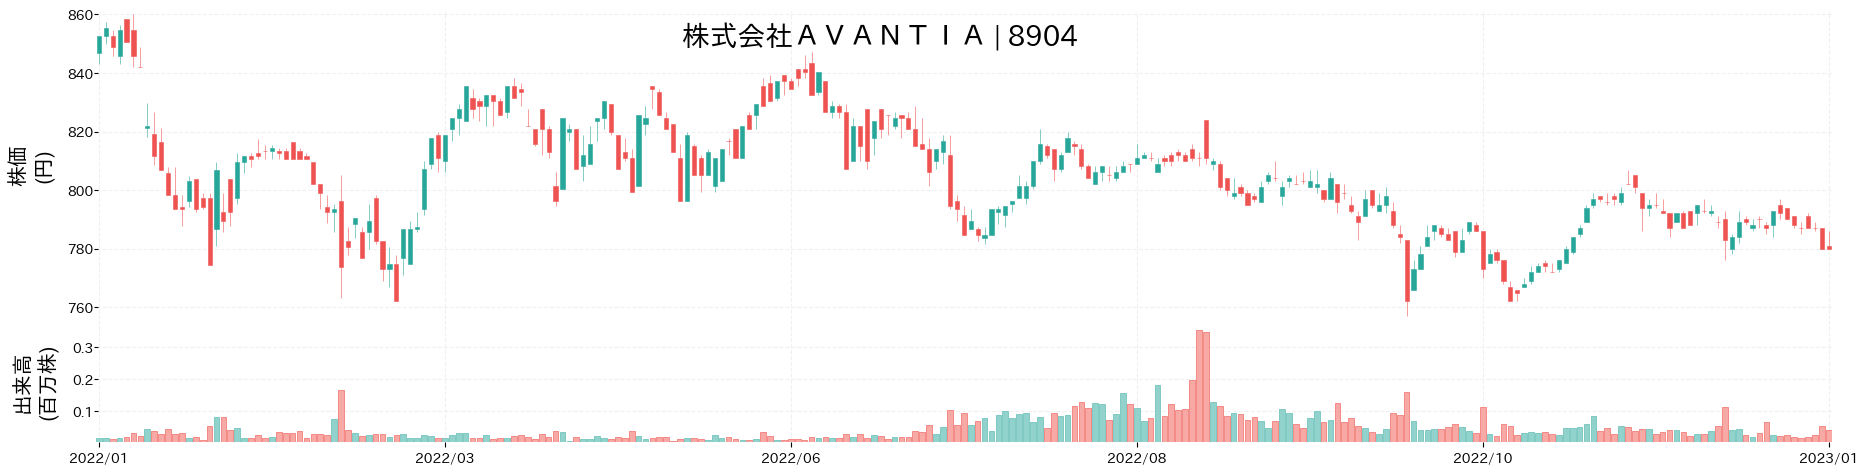 AVANTIAの株価推移(2022)